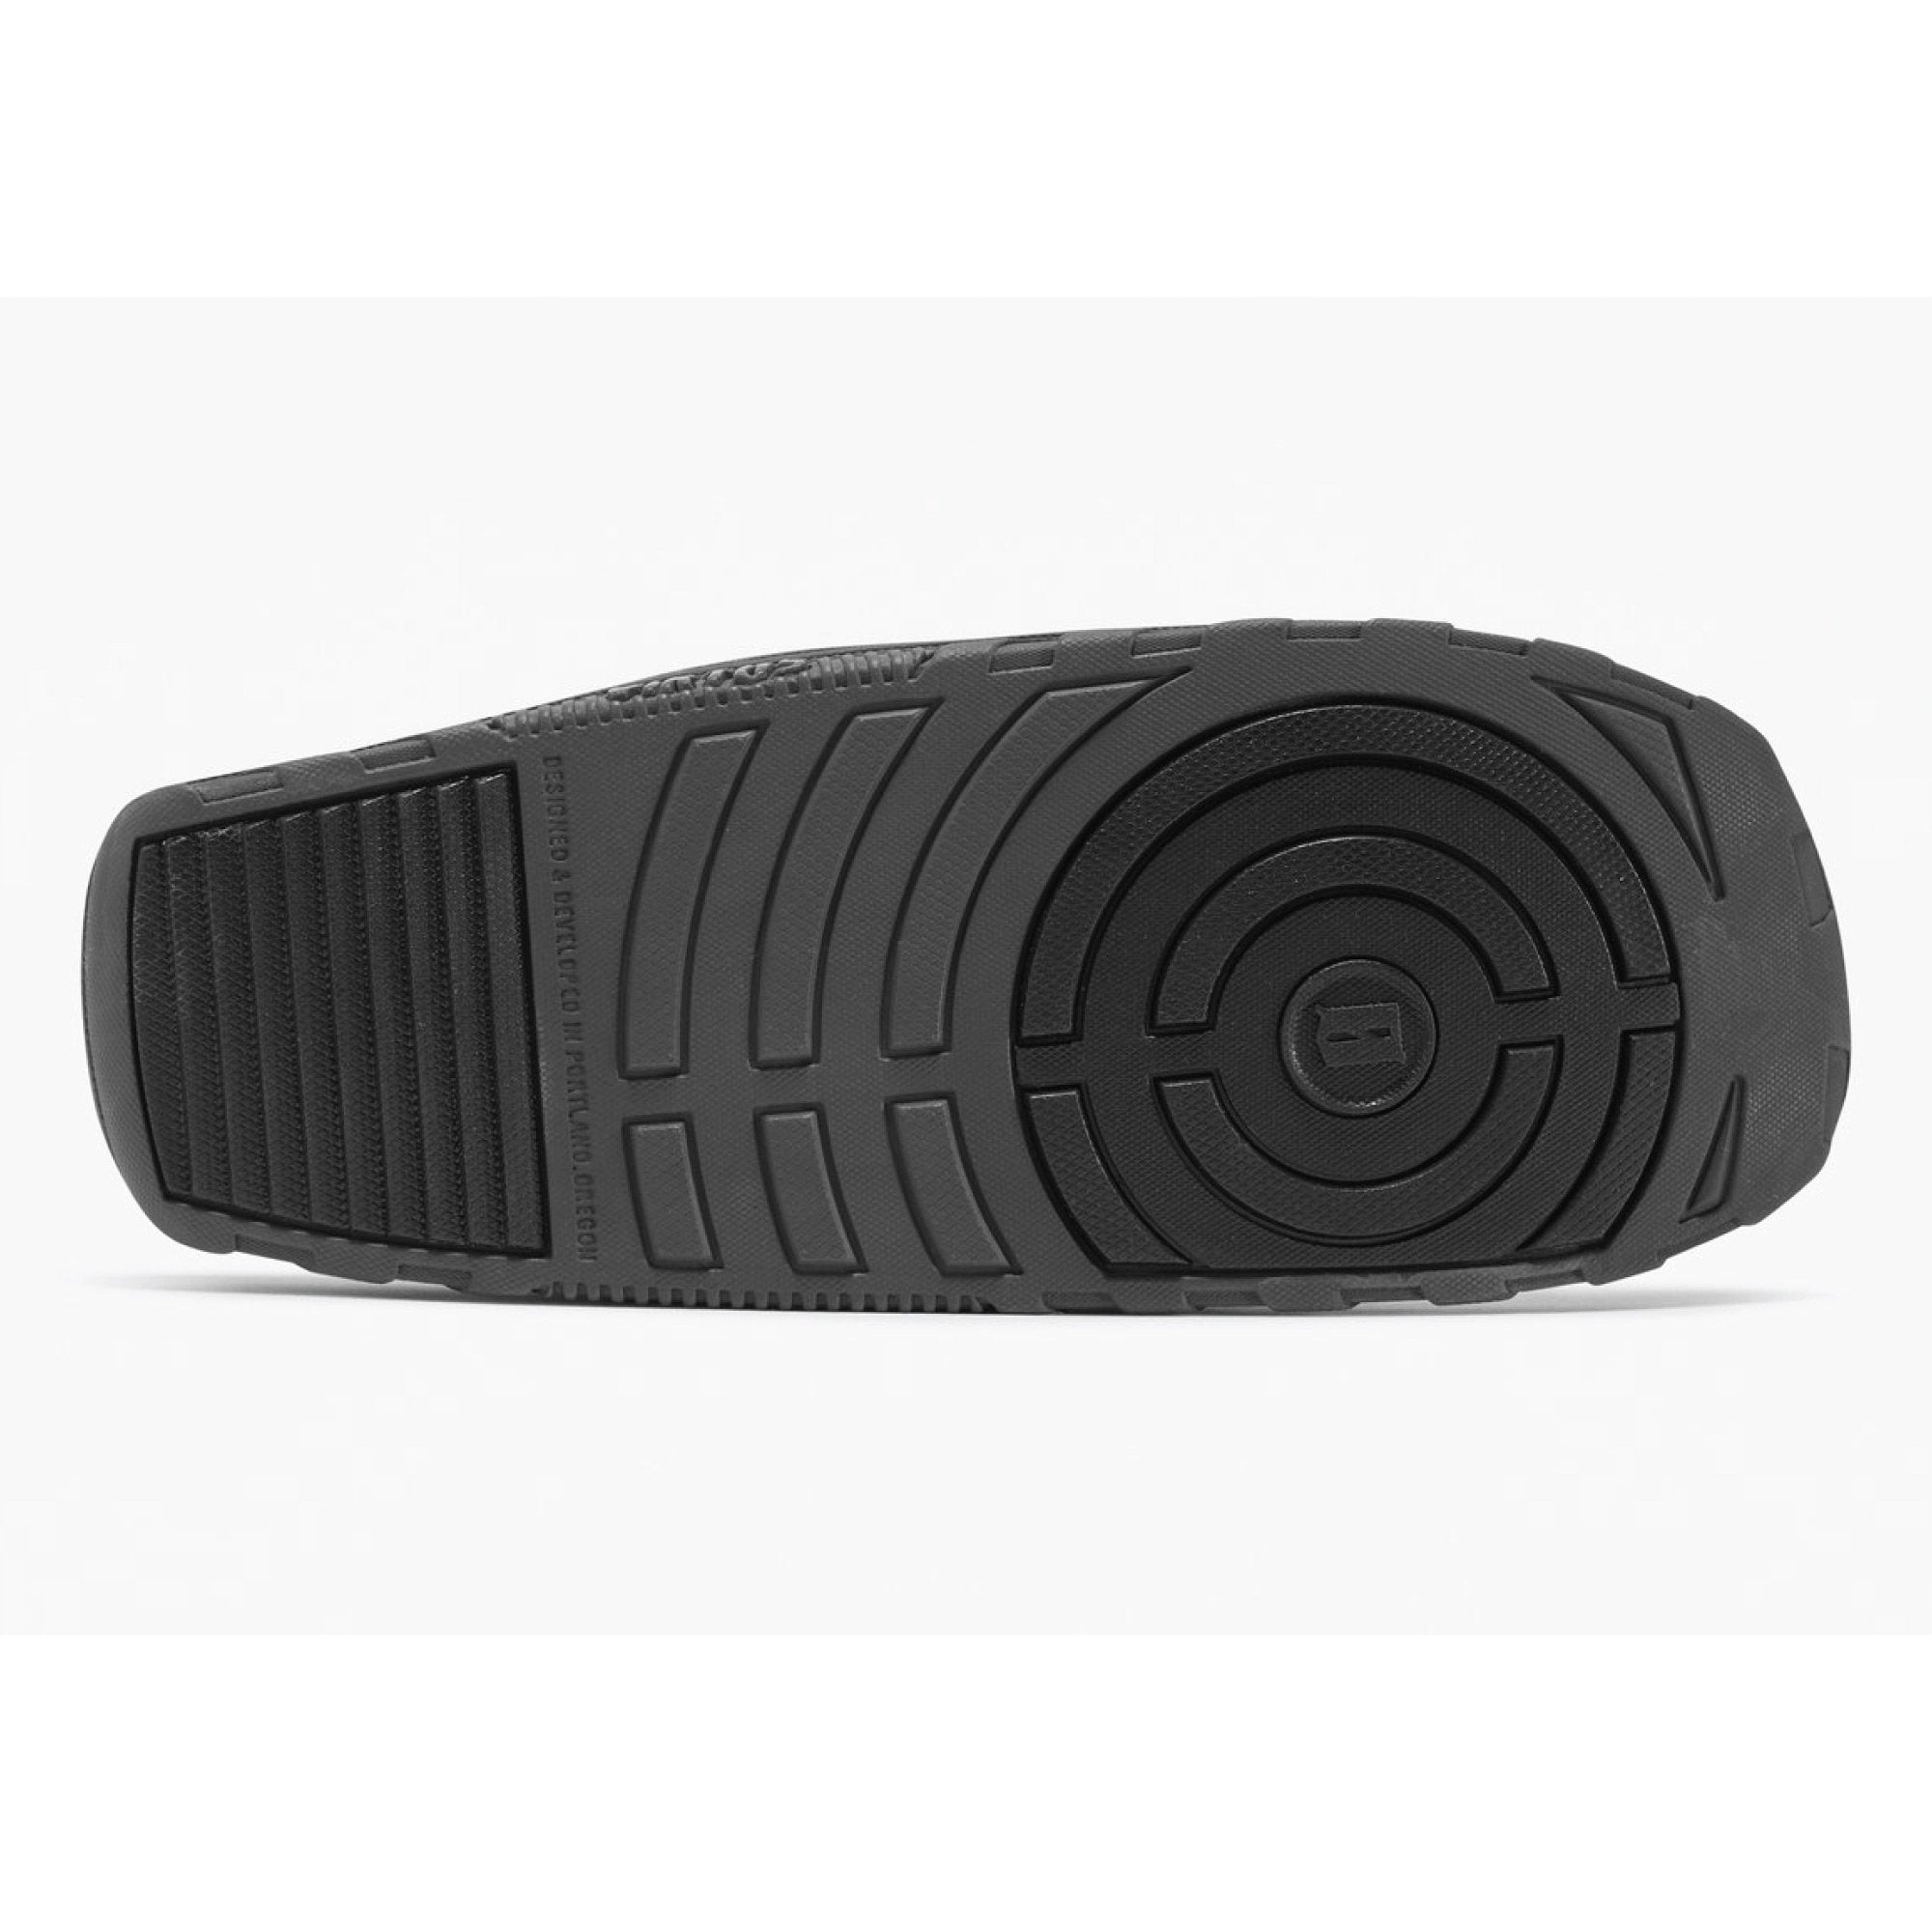 VIKTOS Ruck Recovery Sandals Nightfjall Footwear VIKTOS 7 Tactical Gear Supplier Tactical Distributors Australia